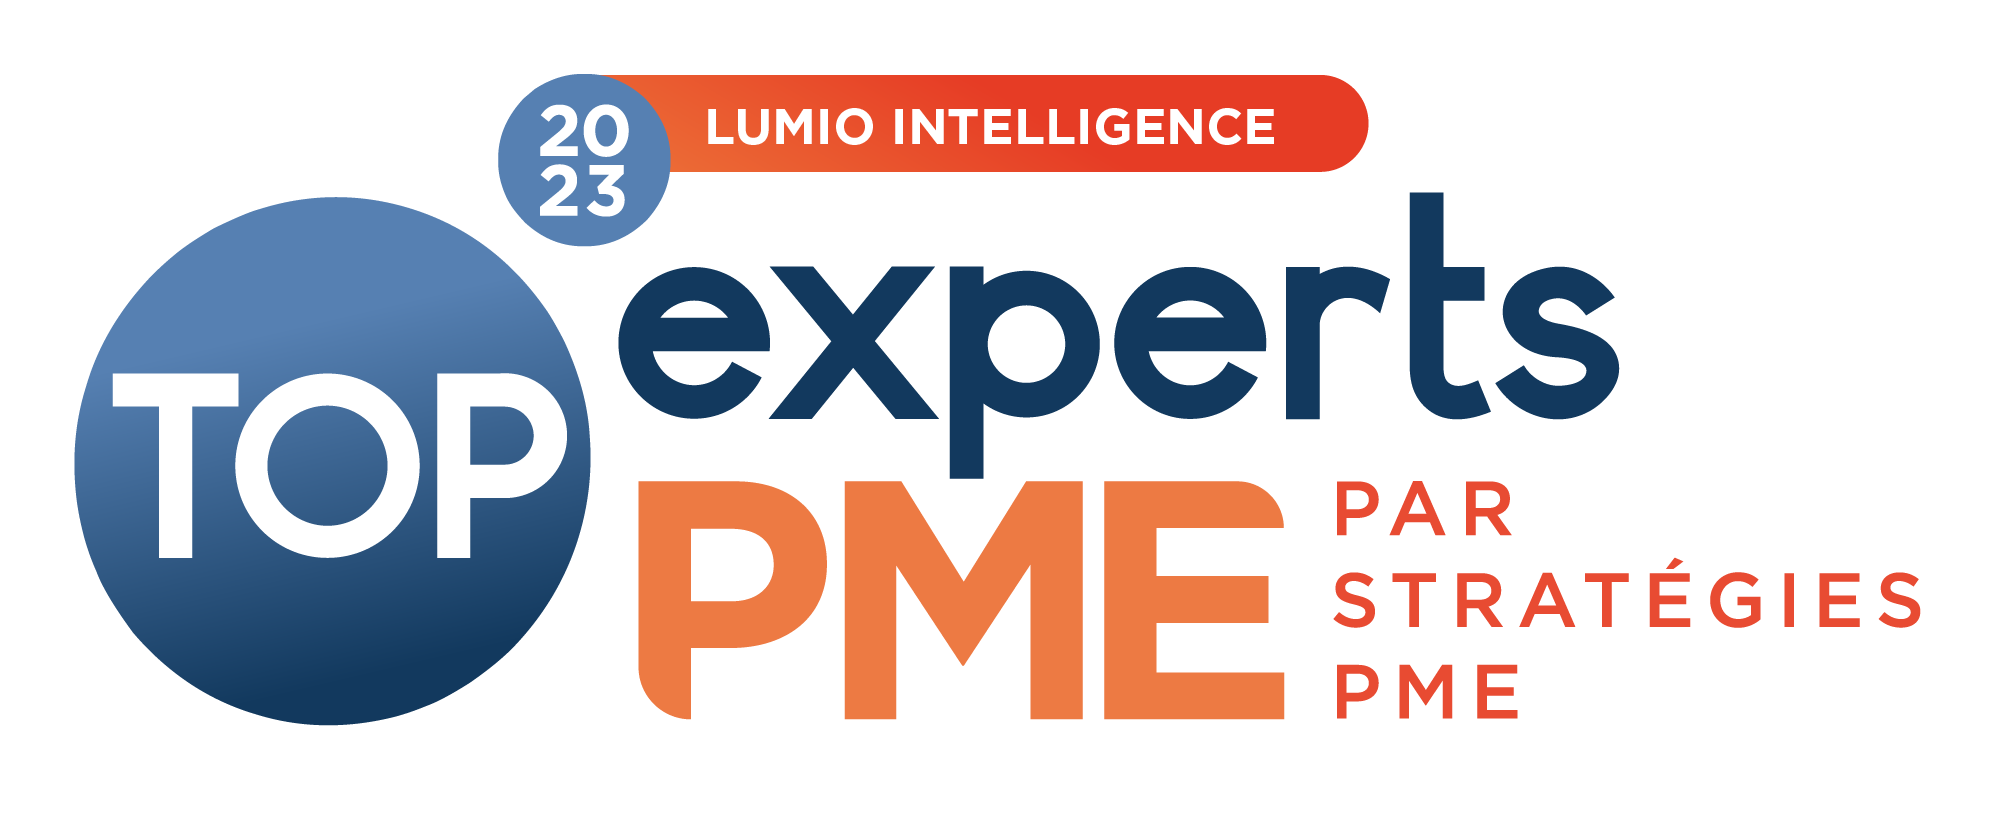 Lumio Intelligence Top Expert Stratégie PME